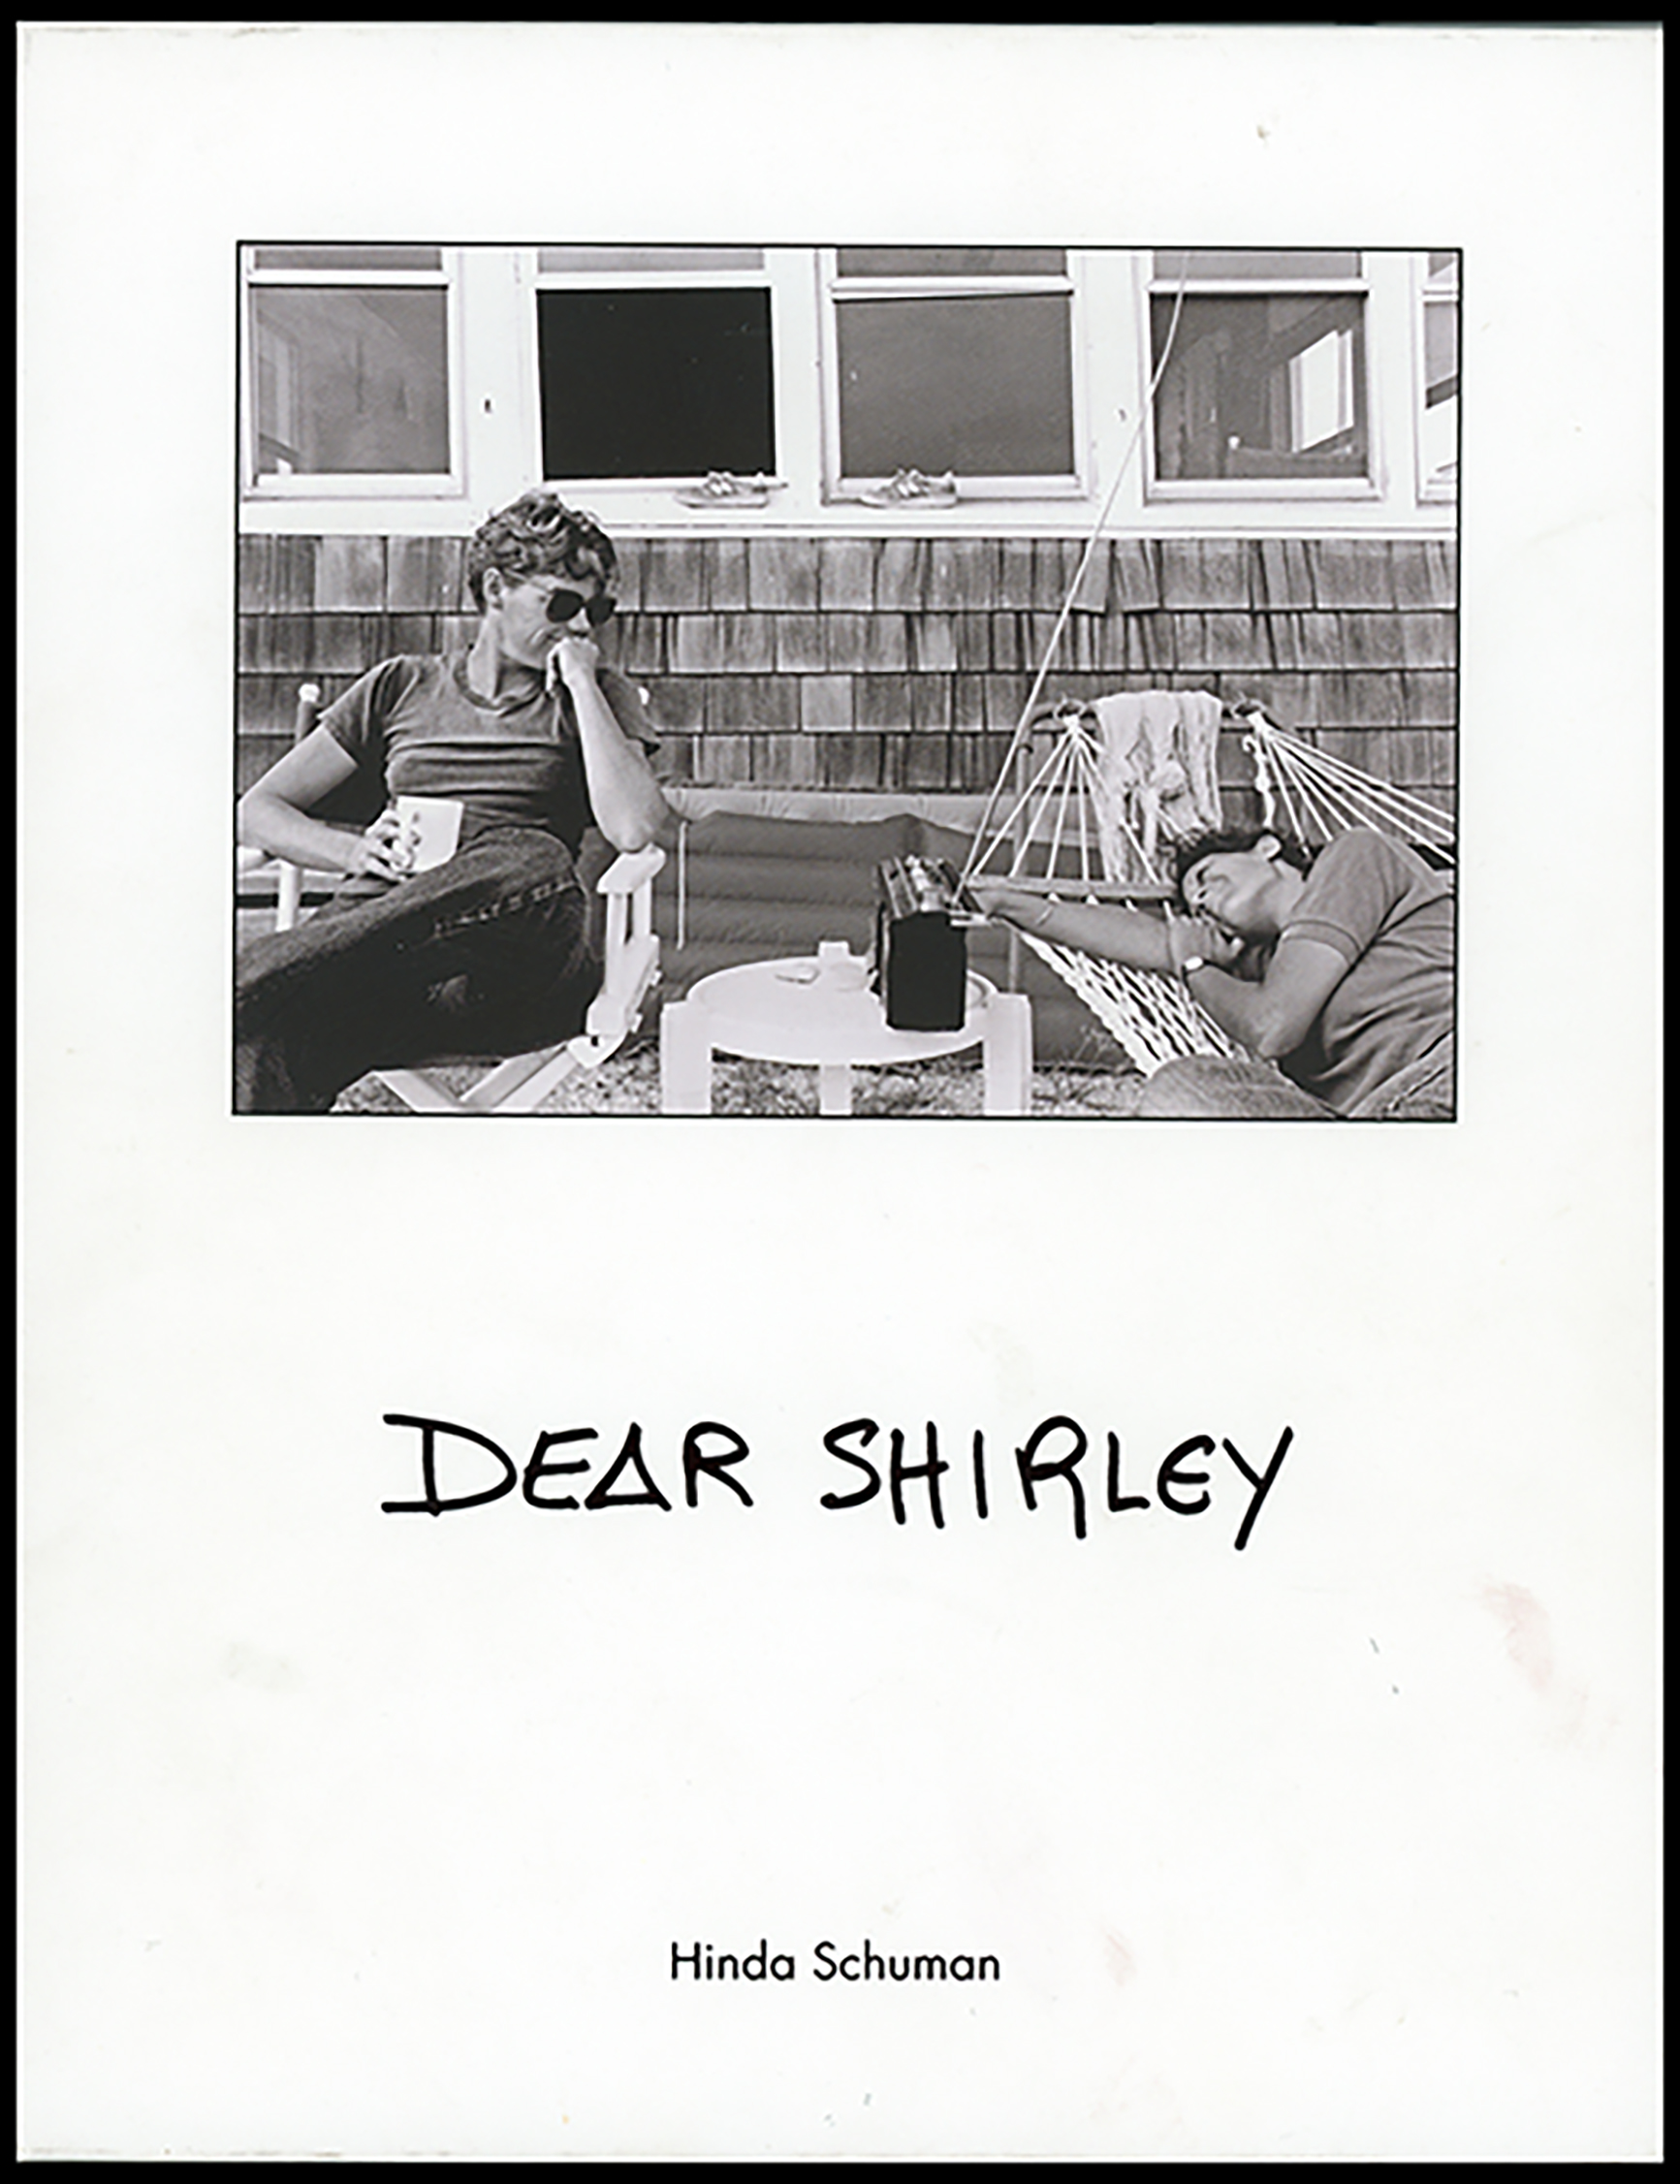 Hinda Schulman: Dear Shirley | LENSCRATCH